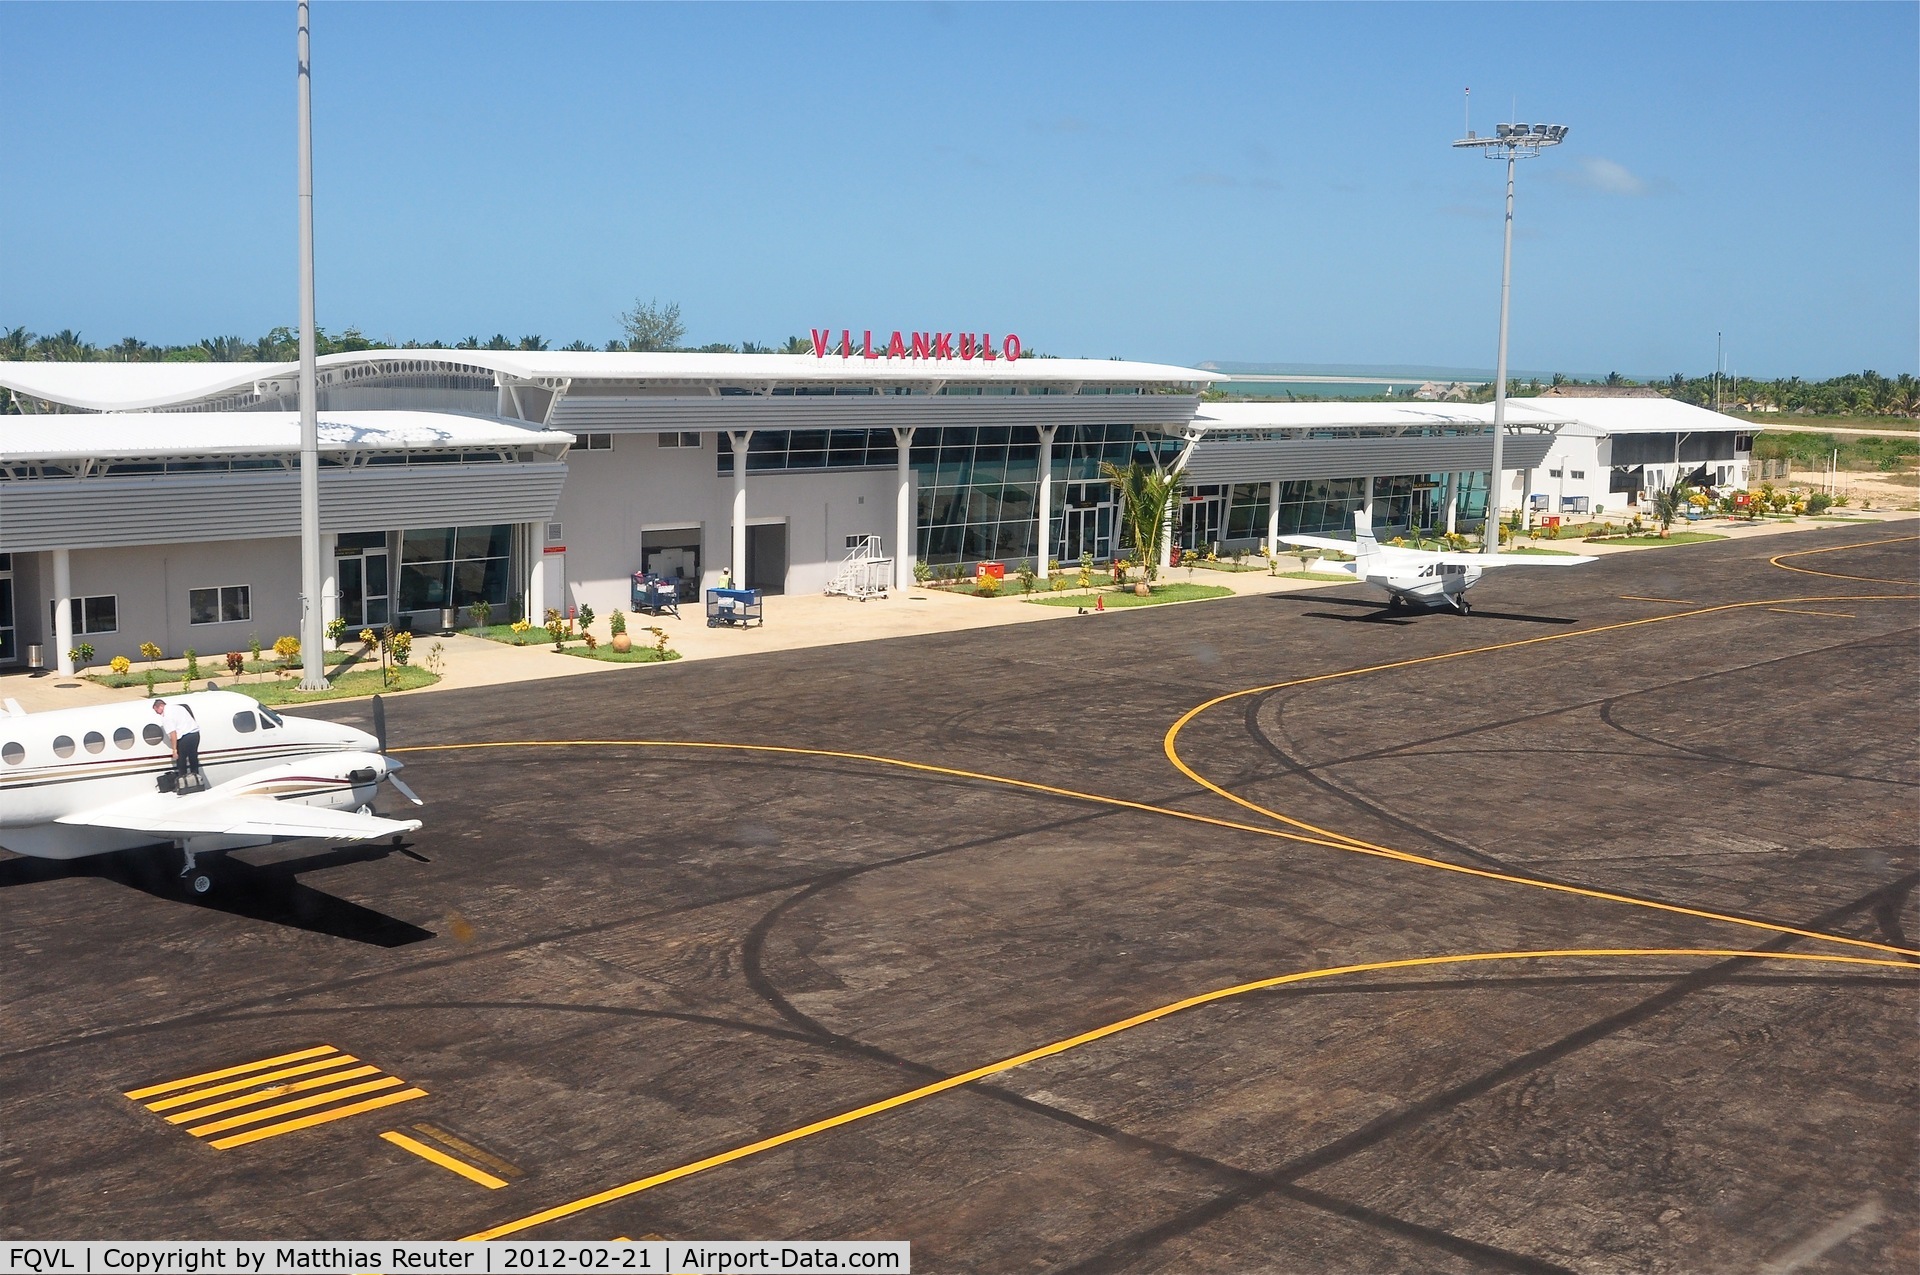 Vilankulo Airport, Vilankulo Mozambique (FQVL) - The new terminal building of Vilankulo Airport FQVL Mozambique 2012.